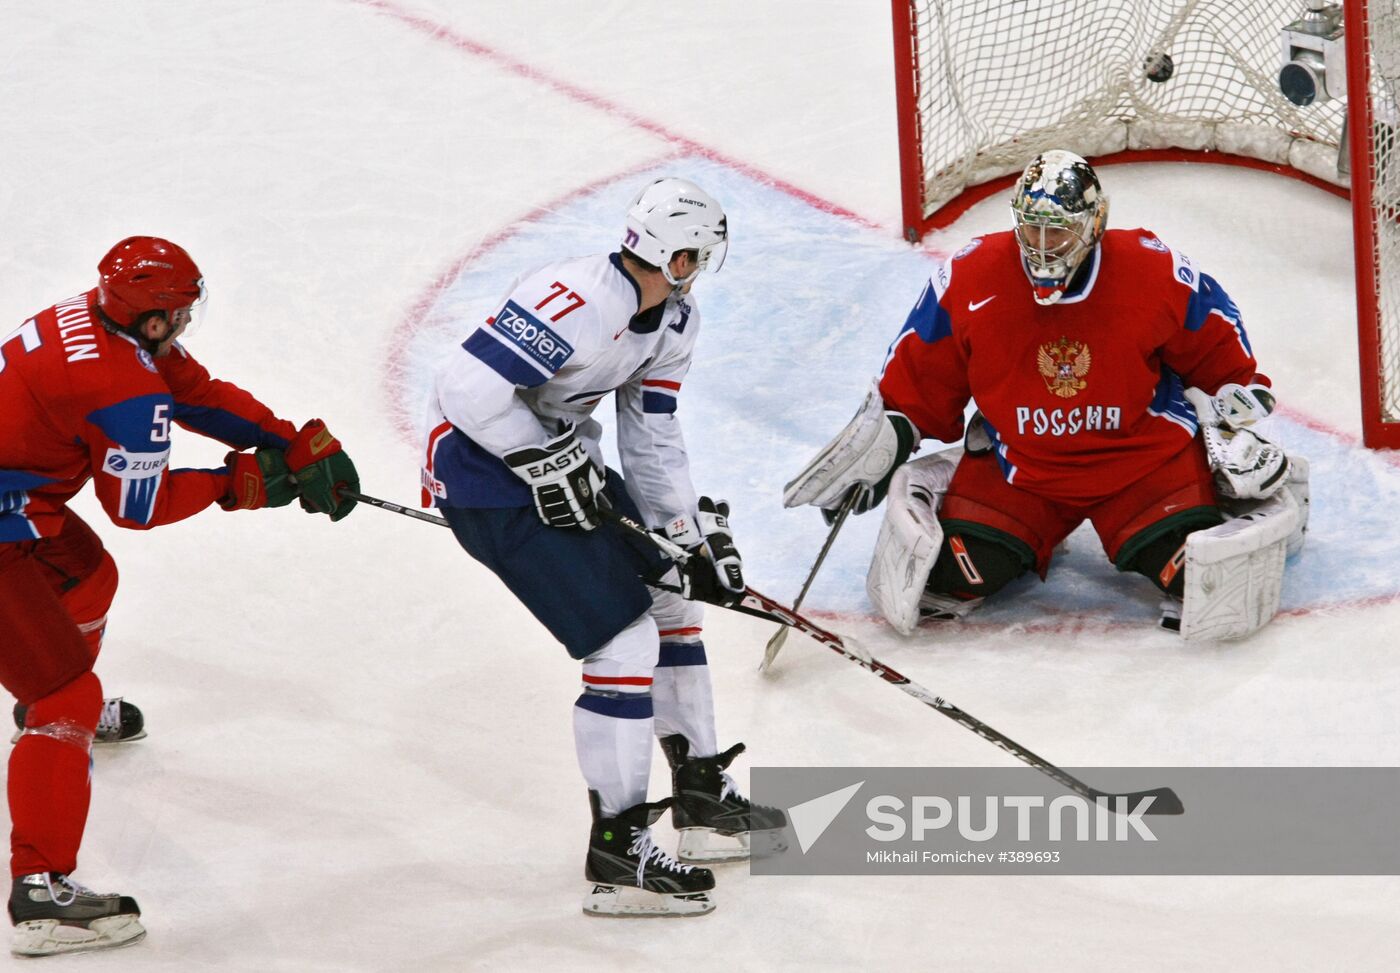 2009 Ice Hockey World Championship: Russia vs. France 7-2